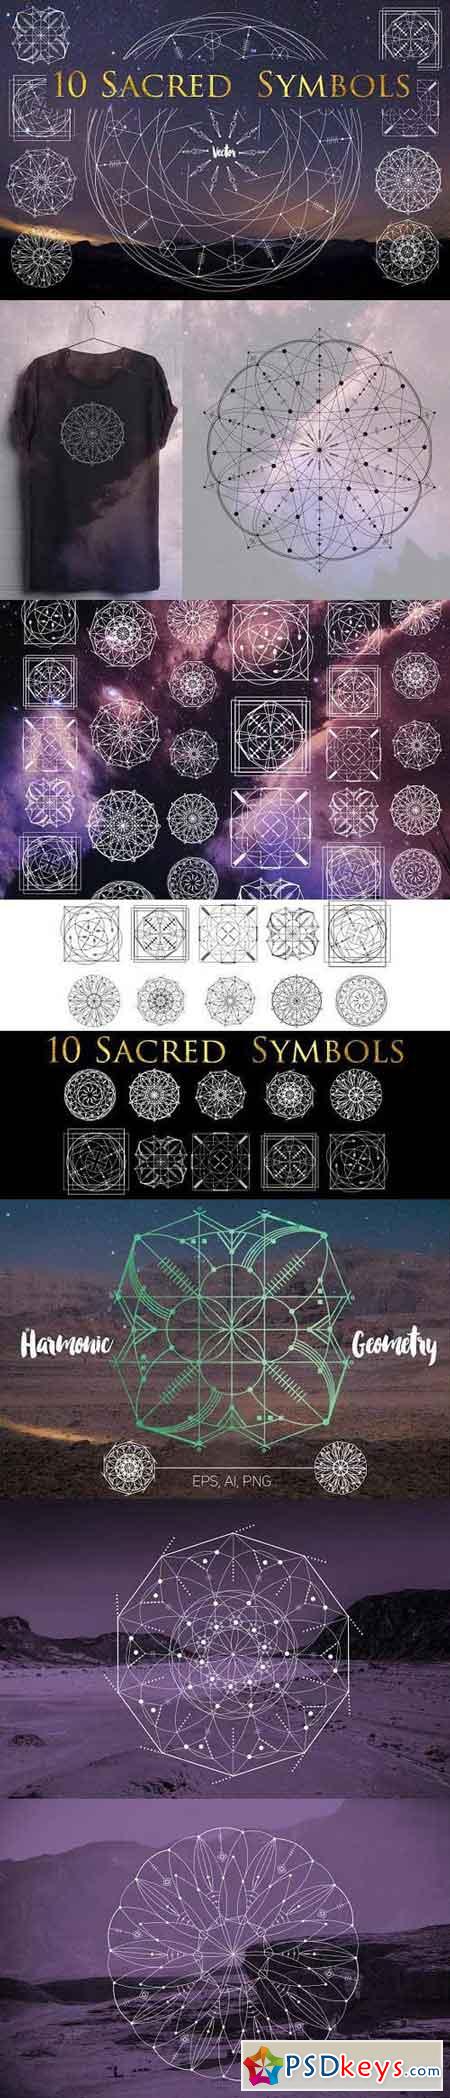 10 Sacred symbols 536061